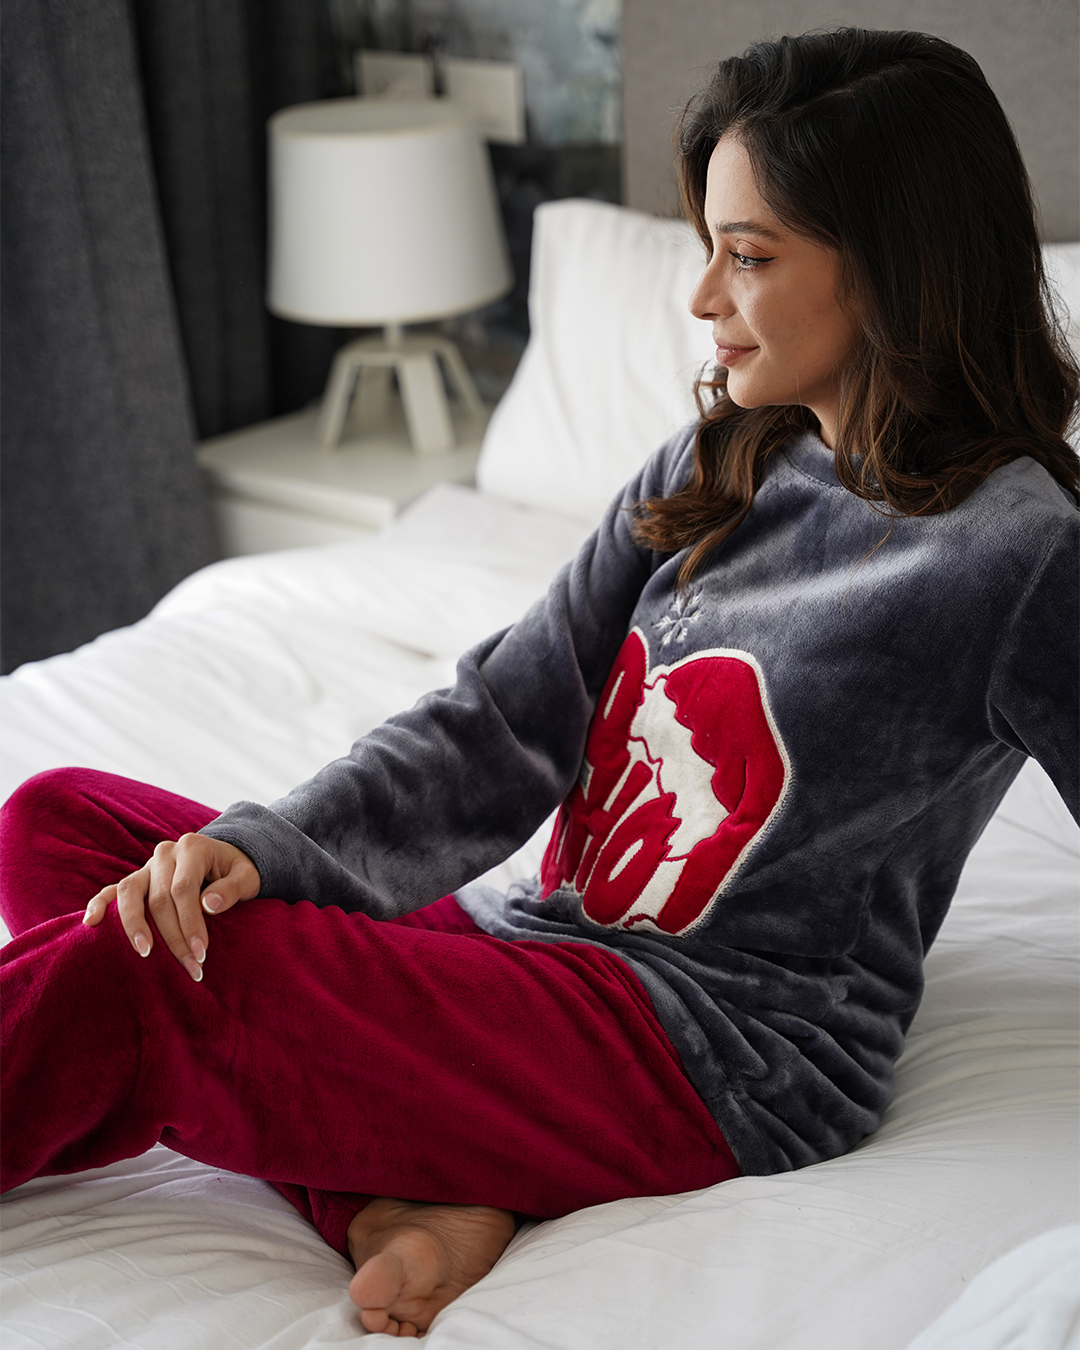 hoho Women's Pajama Spin Christmas Embroidery Polar